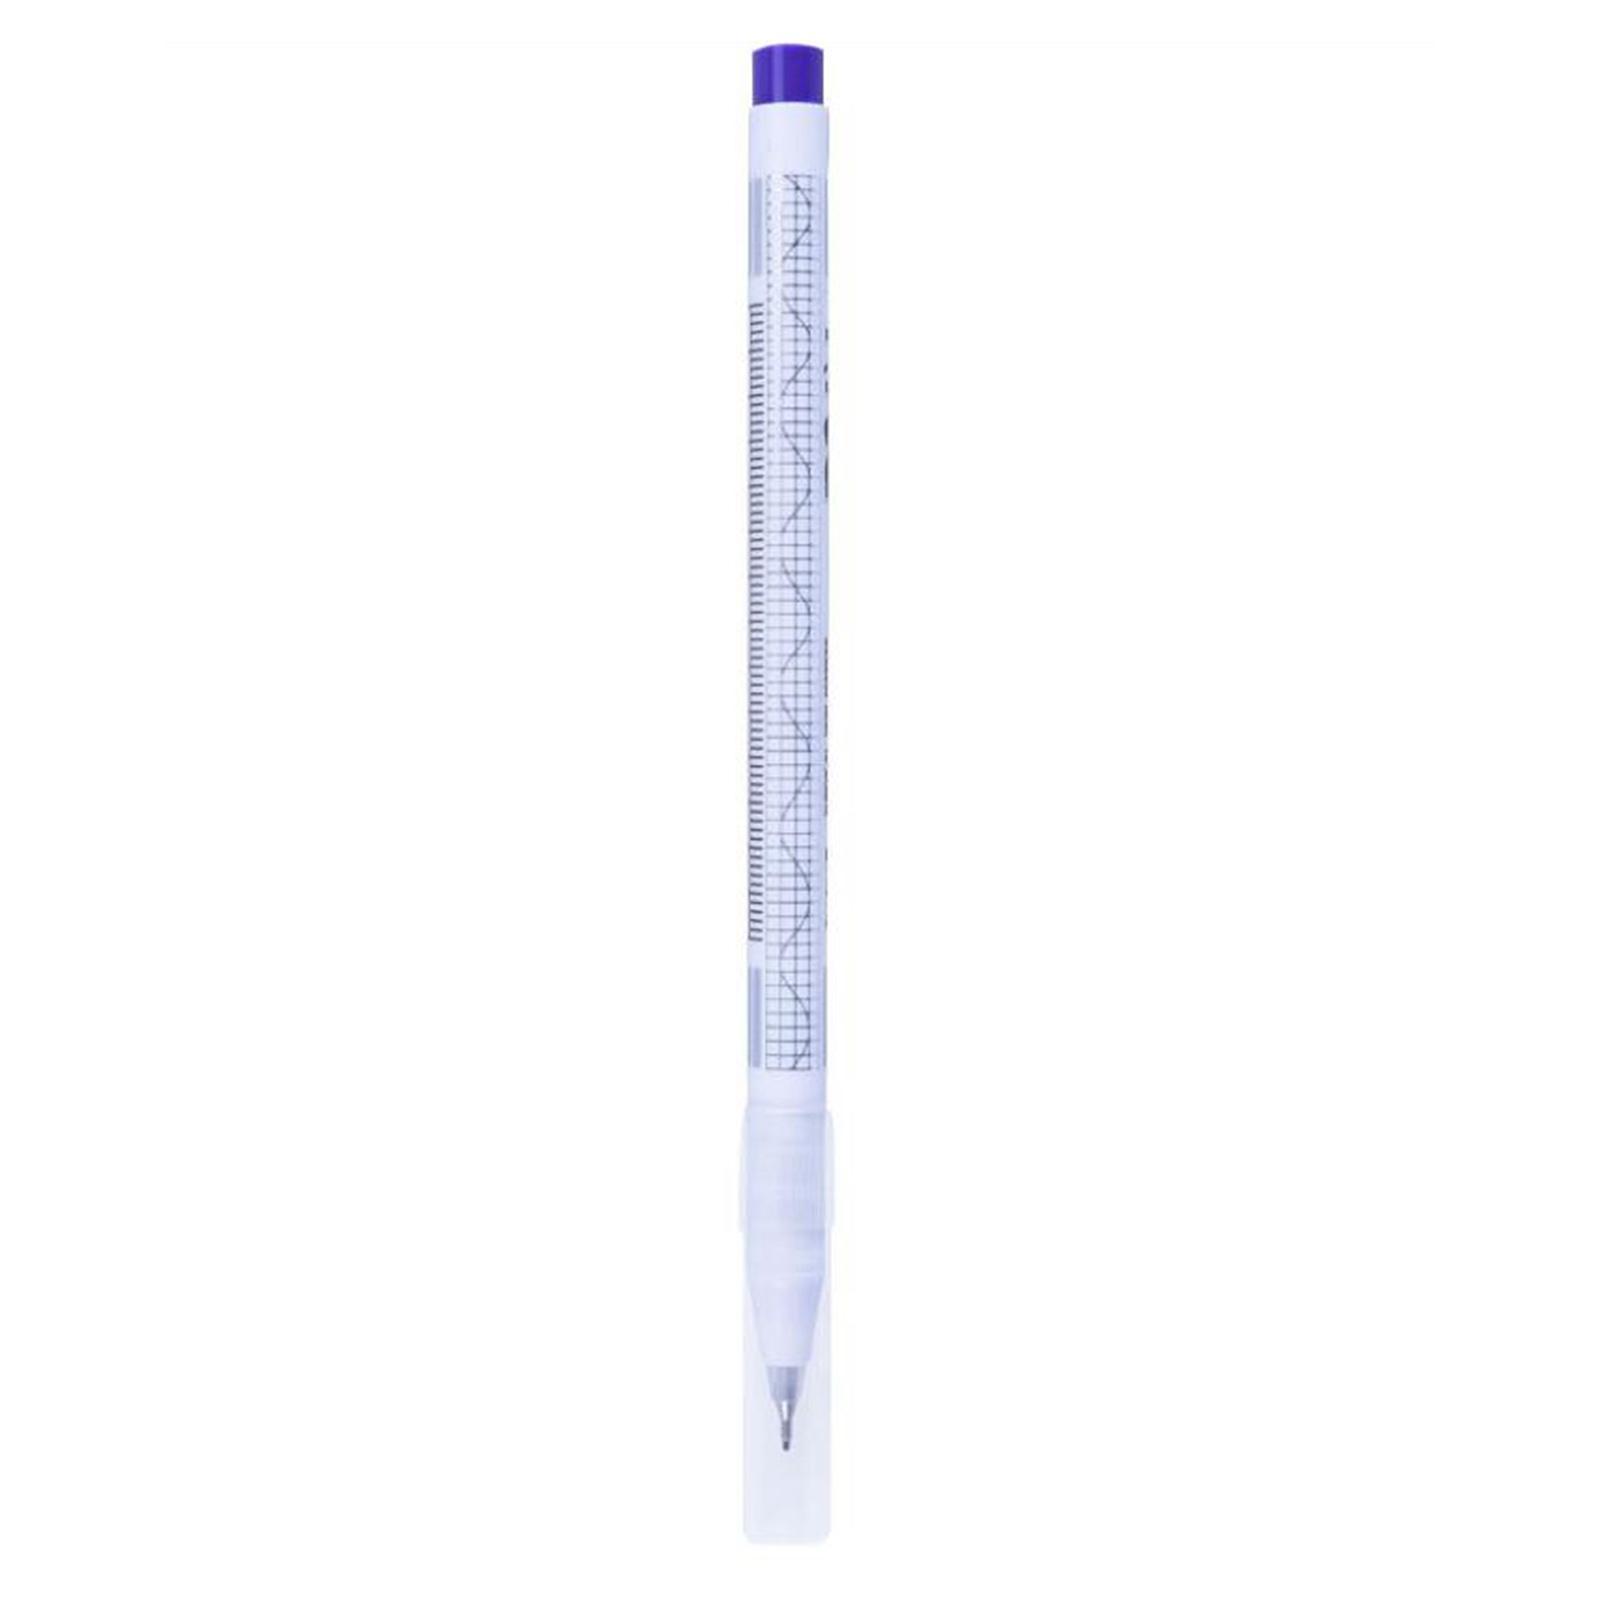 10x  Skin Marker Pen with Paper Ruler for Skin Lips Single Head Pen